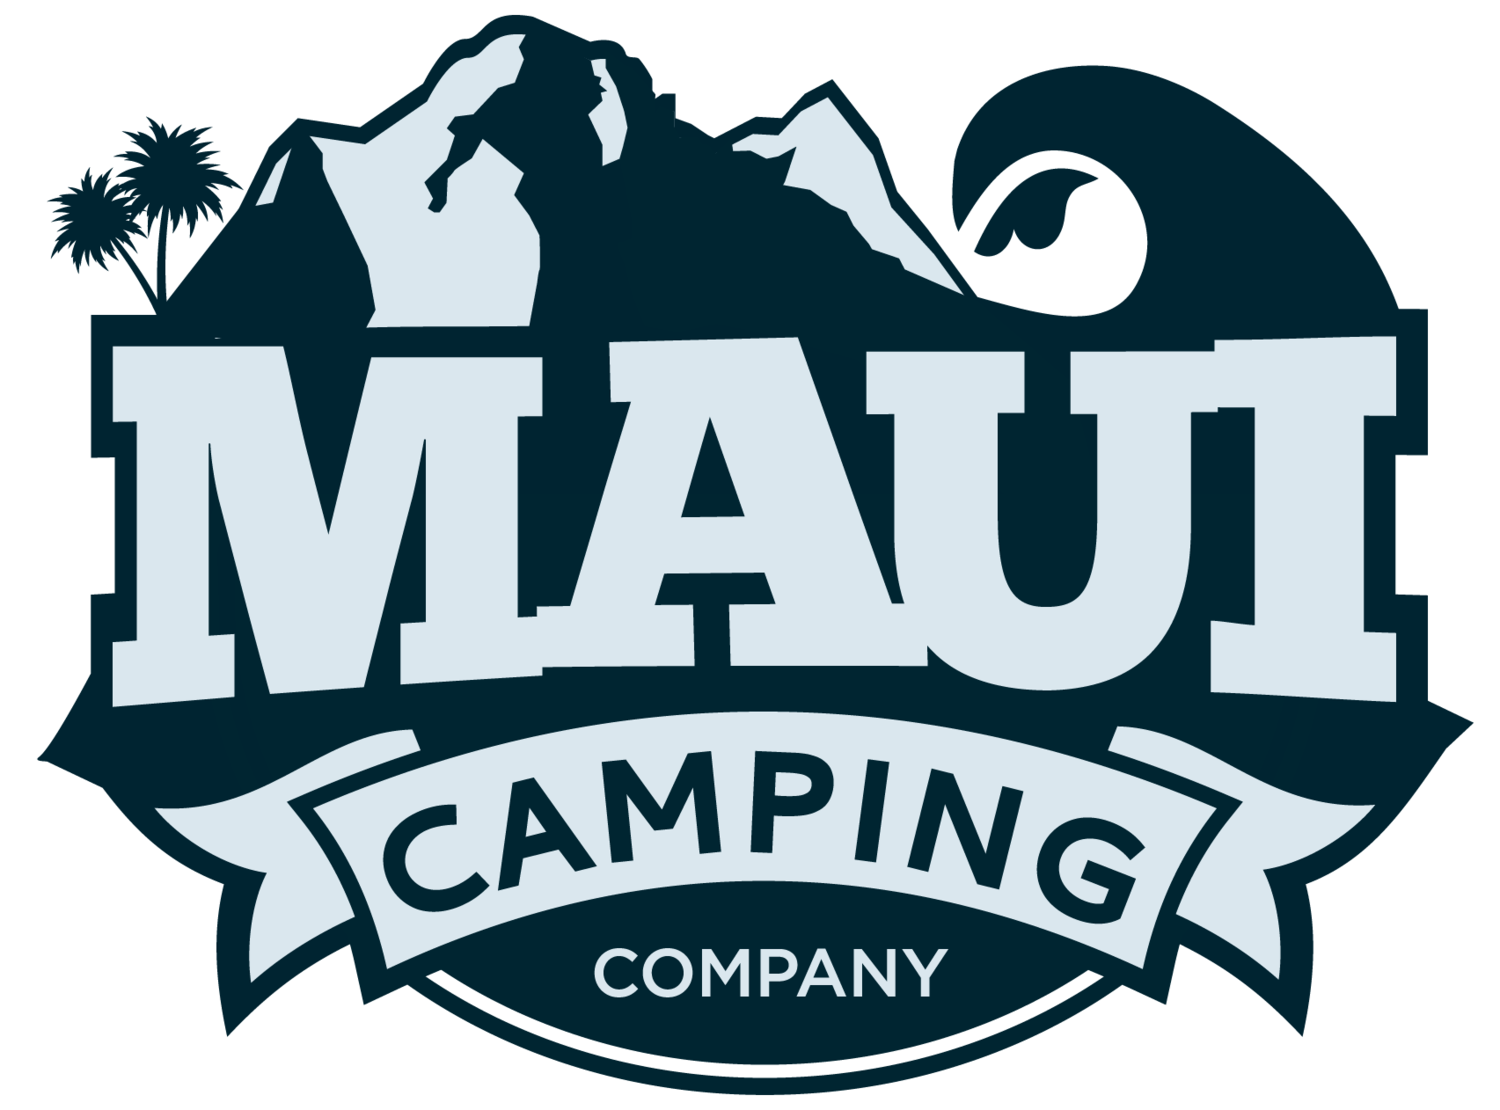 Camping company. Camper (Company). Maui .net логотип. Camp надпись. Co Camp.